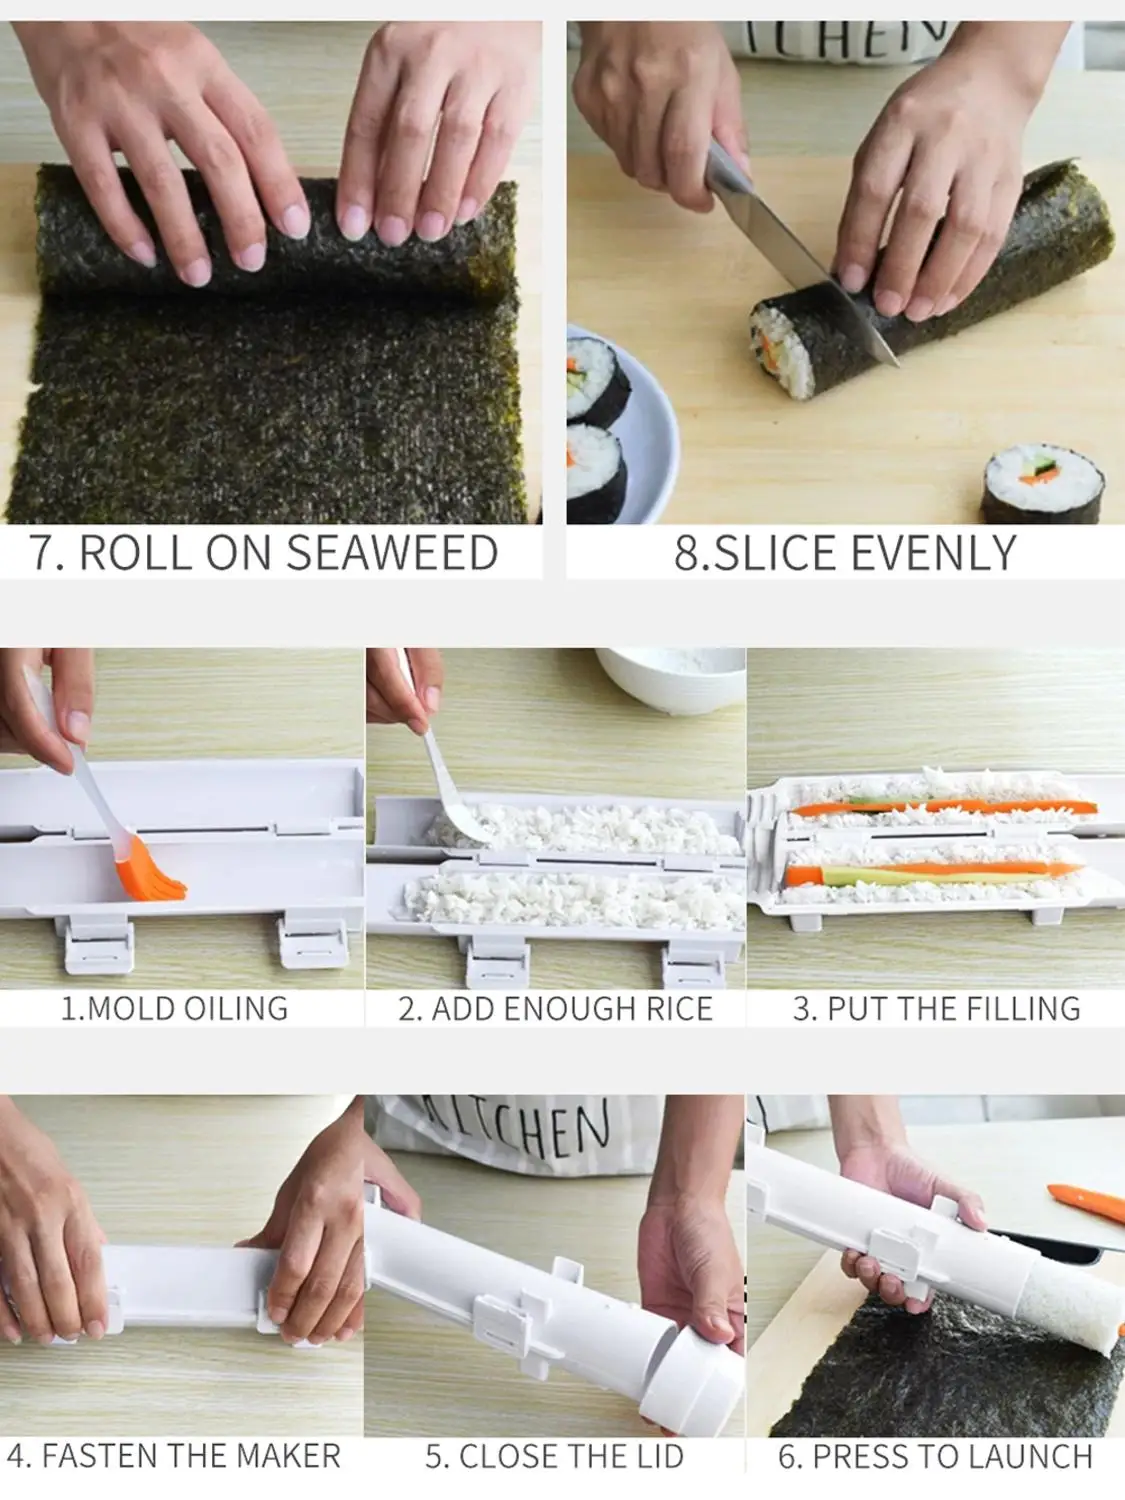 https://ae01.alicdn.com/kf/S4c04d95d5ed5497b8b055fb812ef687fW/Quick-Sushi-Maker-Roller-Rice-Mold-Vegetable-Meat-Rolling-Gadgets-Japanese-Diy-Sushi-Device-Making-Machine.jpg